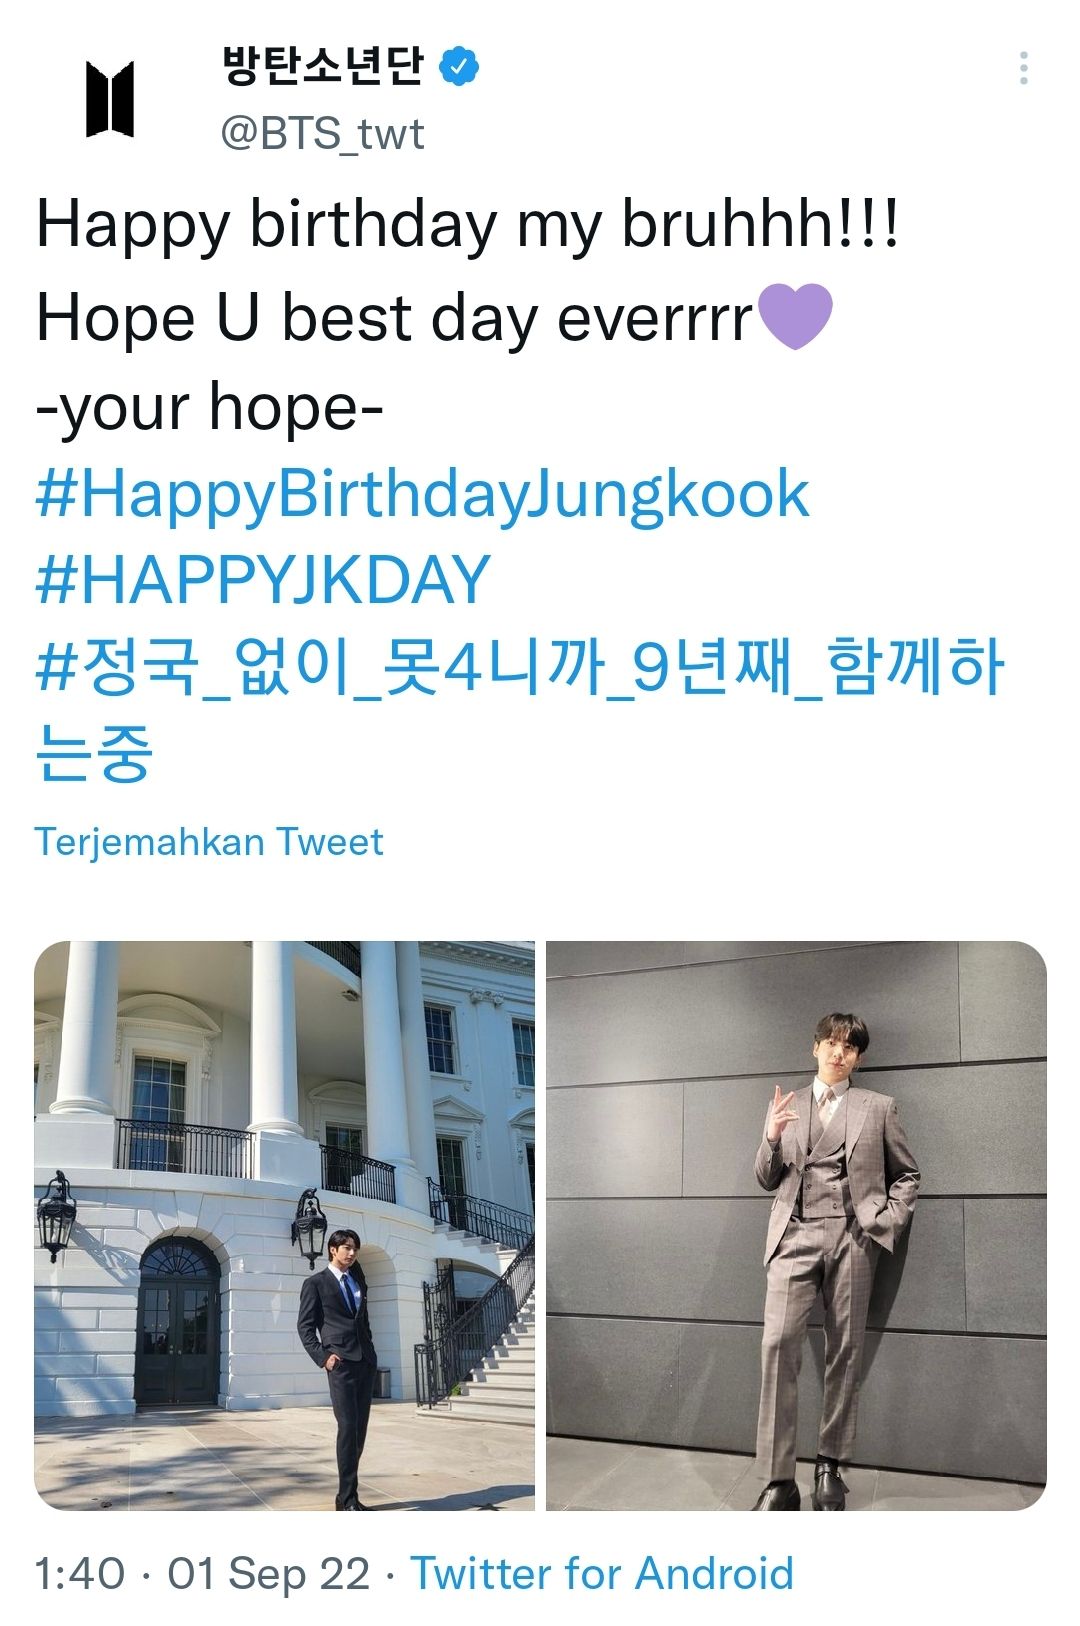 Ucapan selamat ulang tahun dari J-Hope untuk Jungkook BTS./Twitter/@BTS_twt